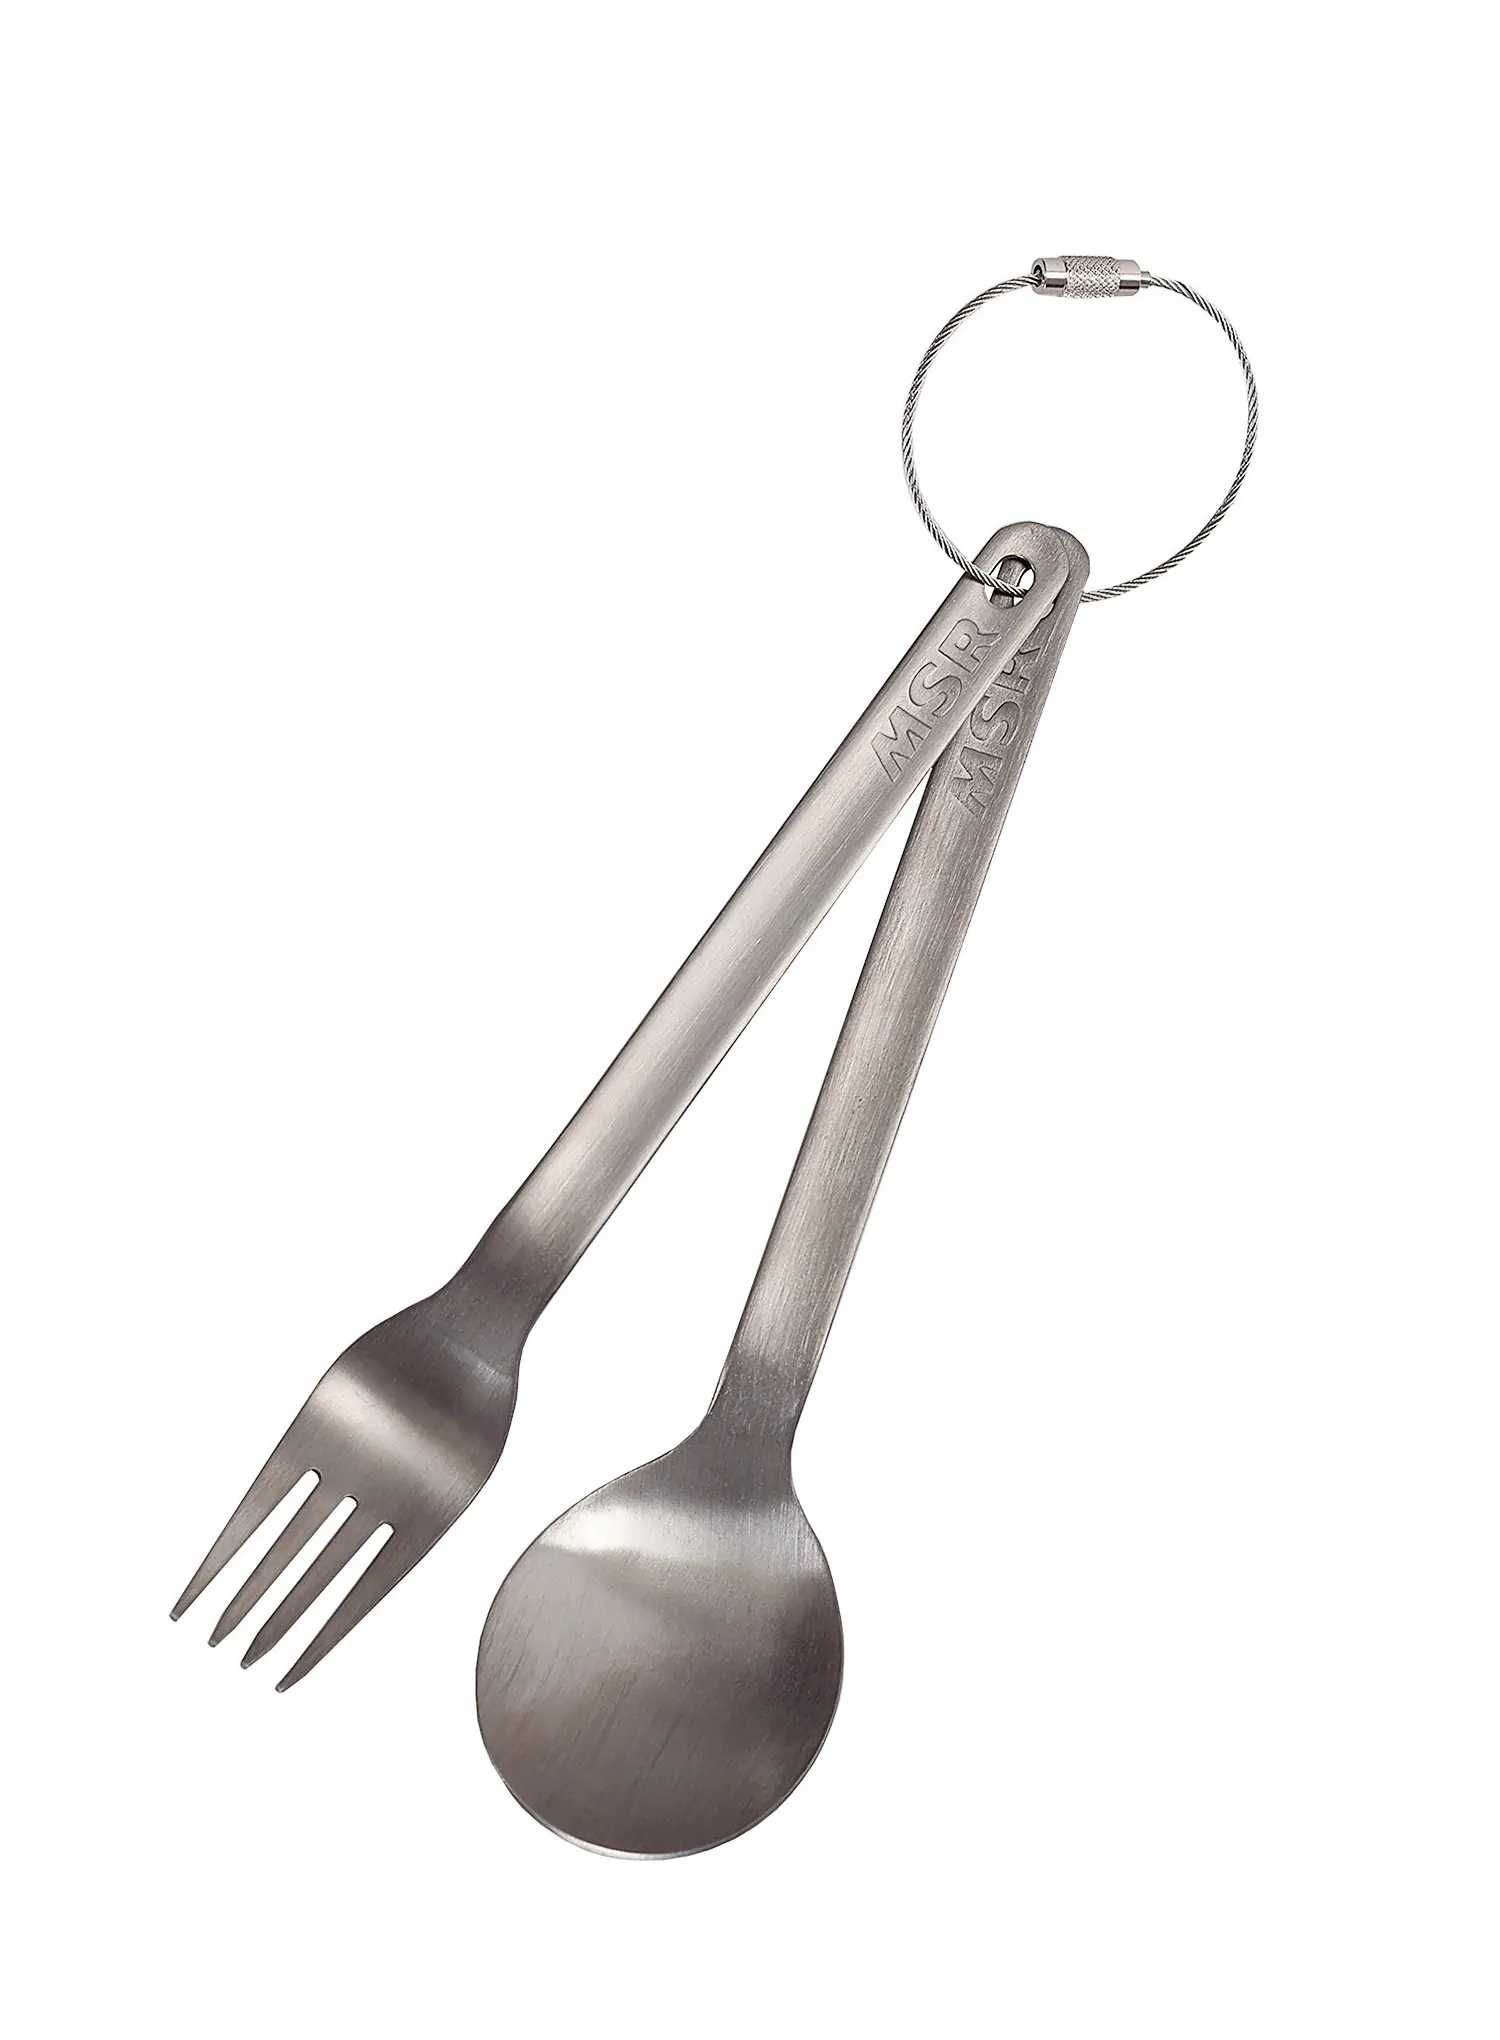 Sztućce tytanowe MSR Titanium Fork & Spoon